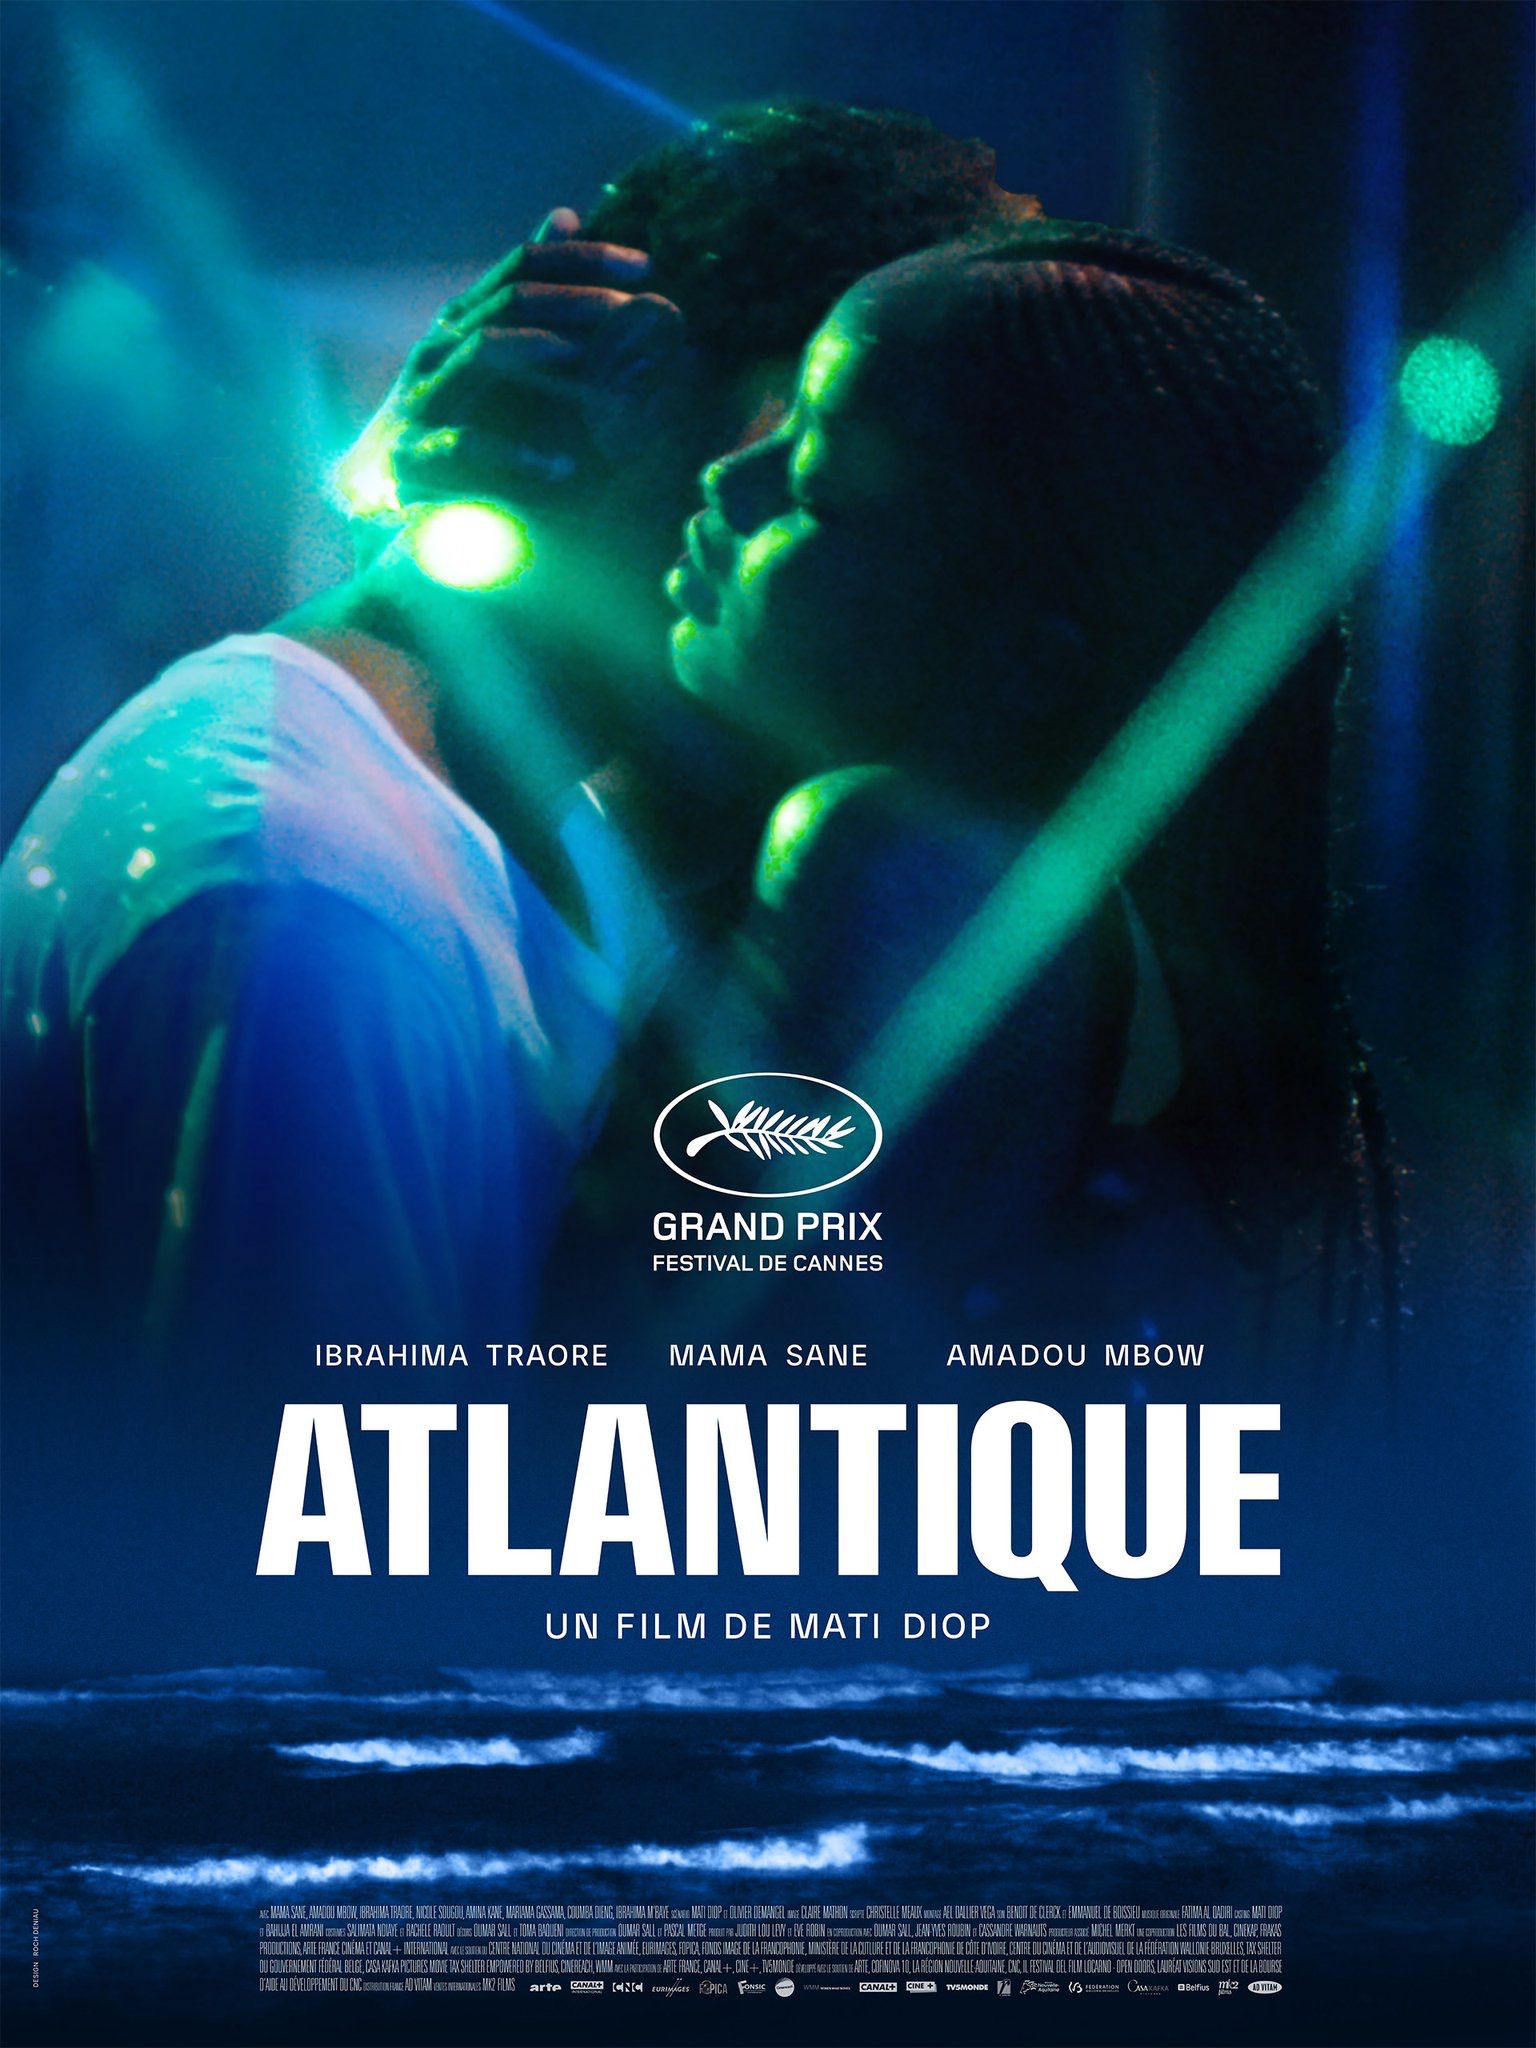 Atlantique - Film (2019) streaming VF gratuit complet